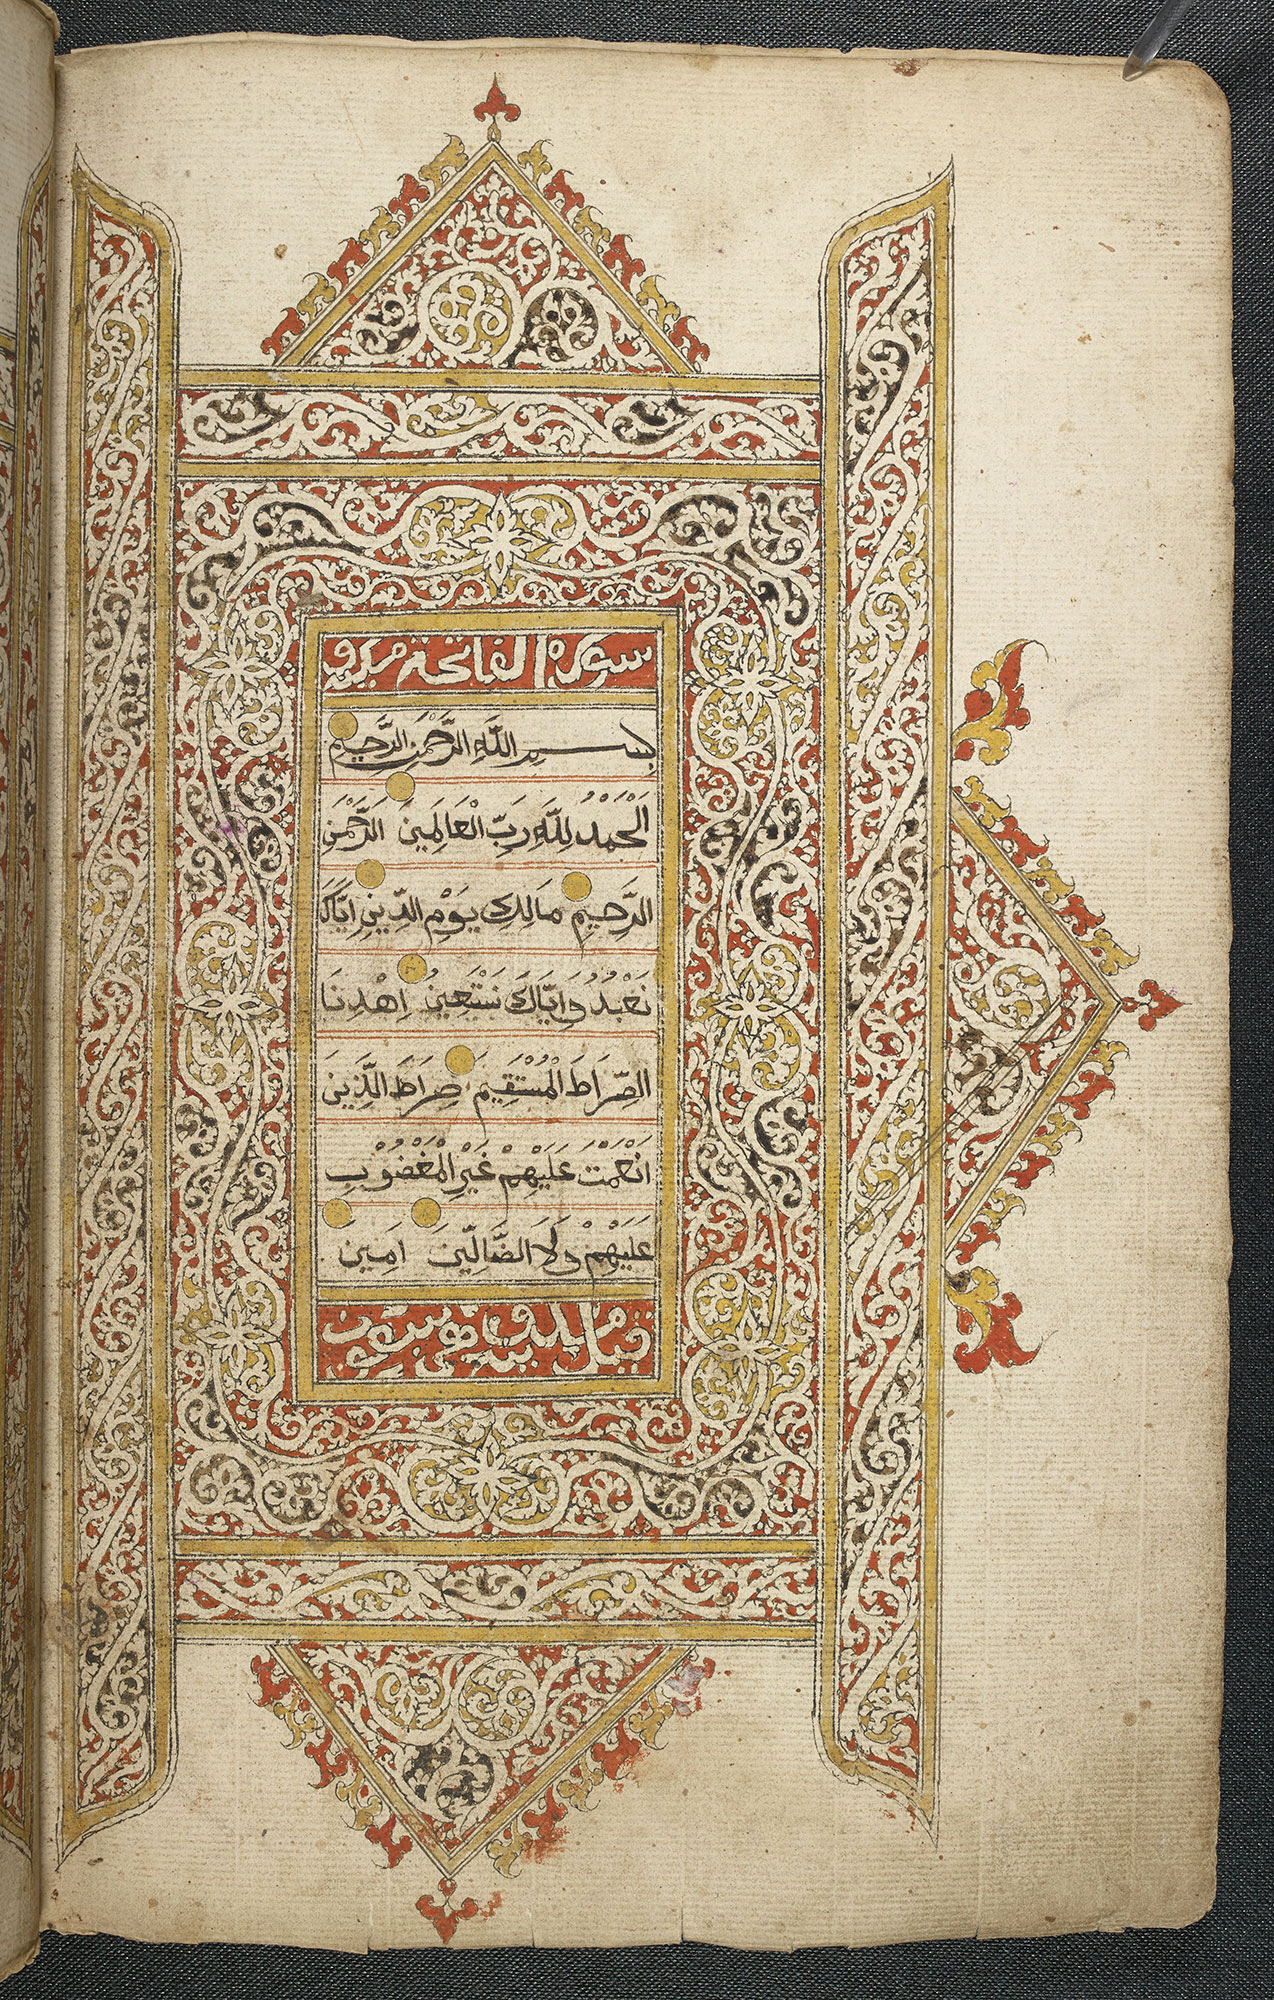 Qur’an manuscript from Aceh showing Surat al-Fatihah (British Library)